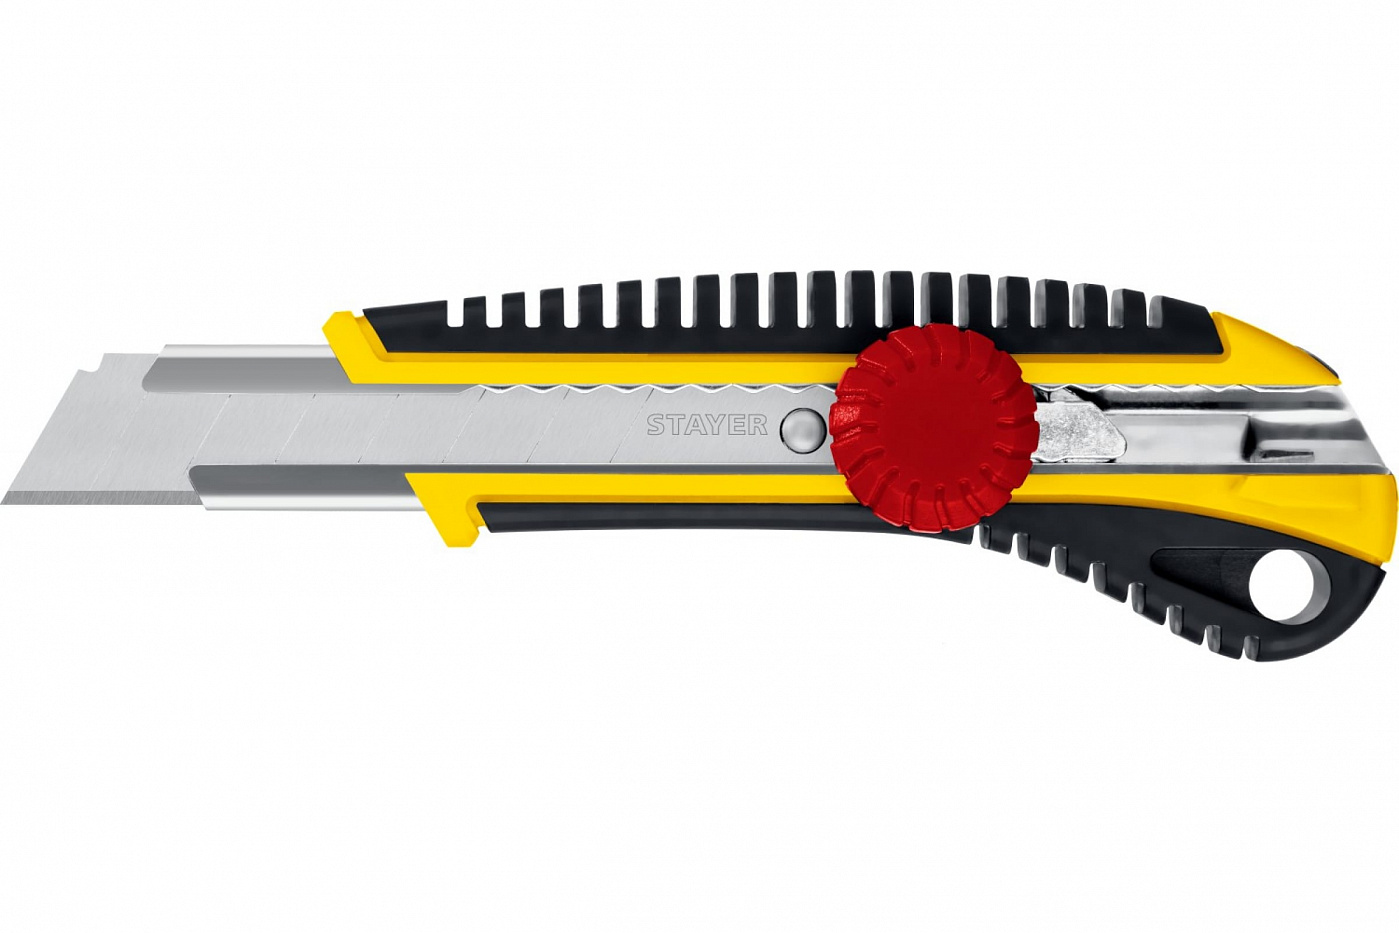 Нож с винтовым фиксатором Stayer KS-18, сегмент. лезвия 18 мм струбцина f образная быстрозажимная с фиксатором 200 мм ормис hardax 44 1 320